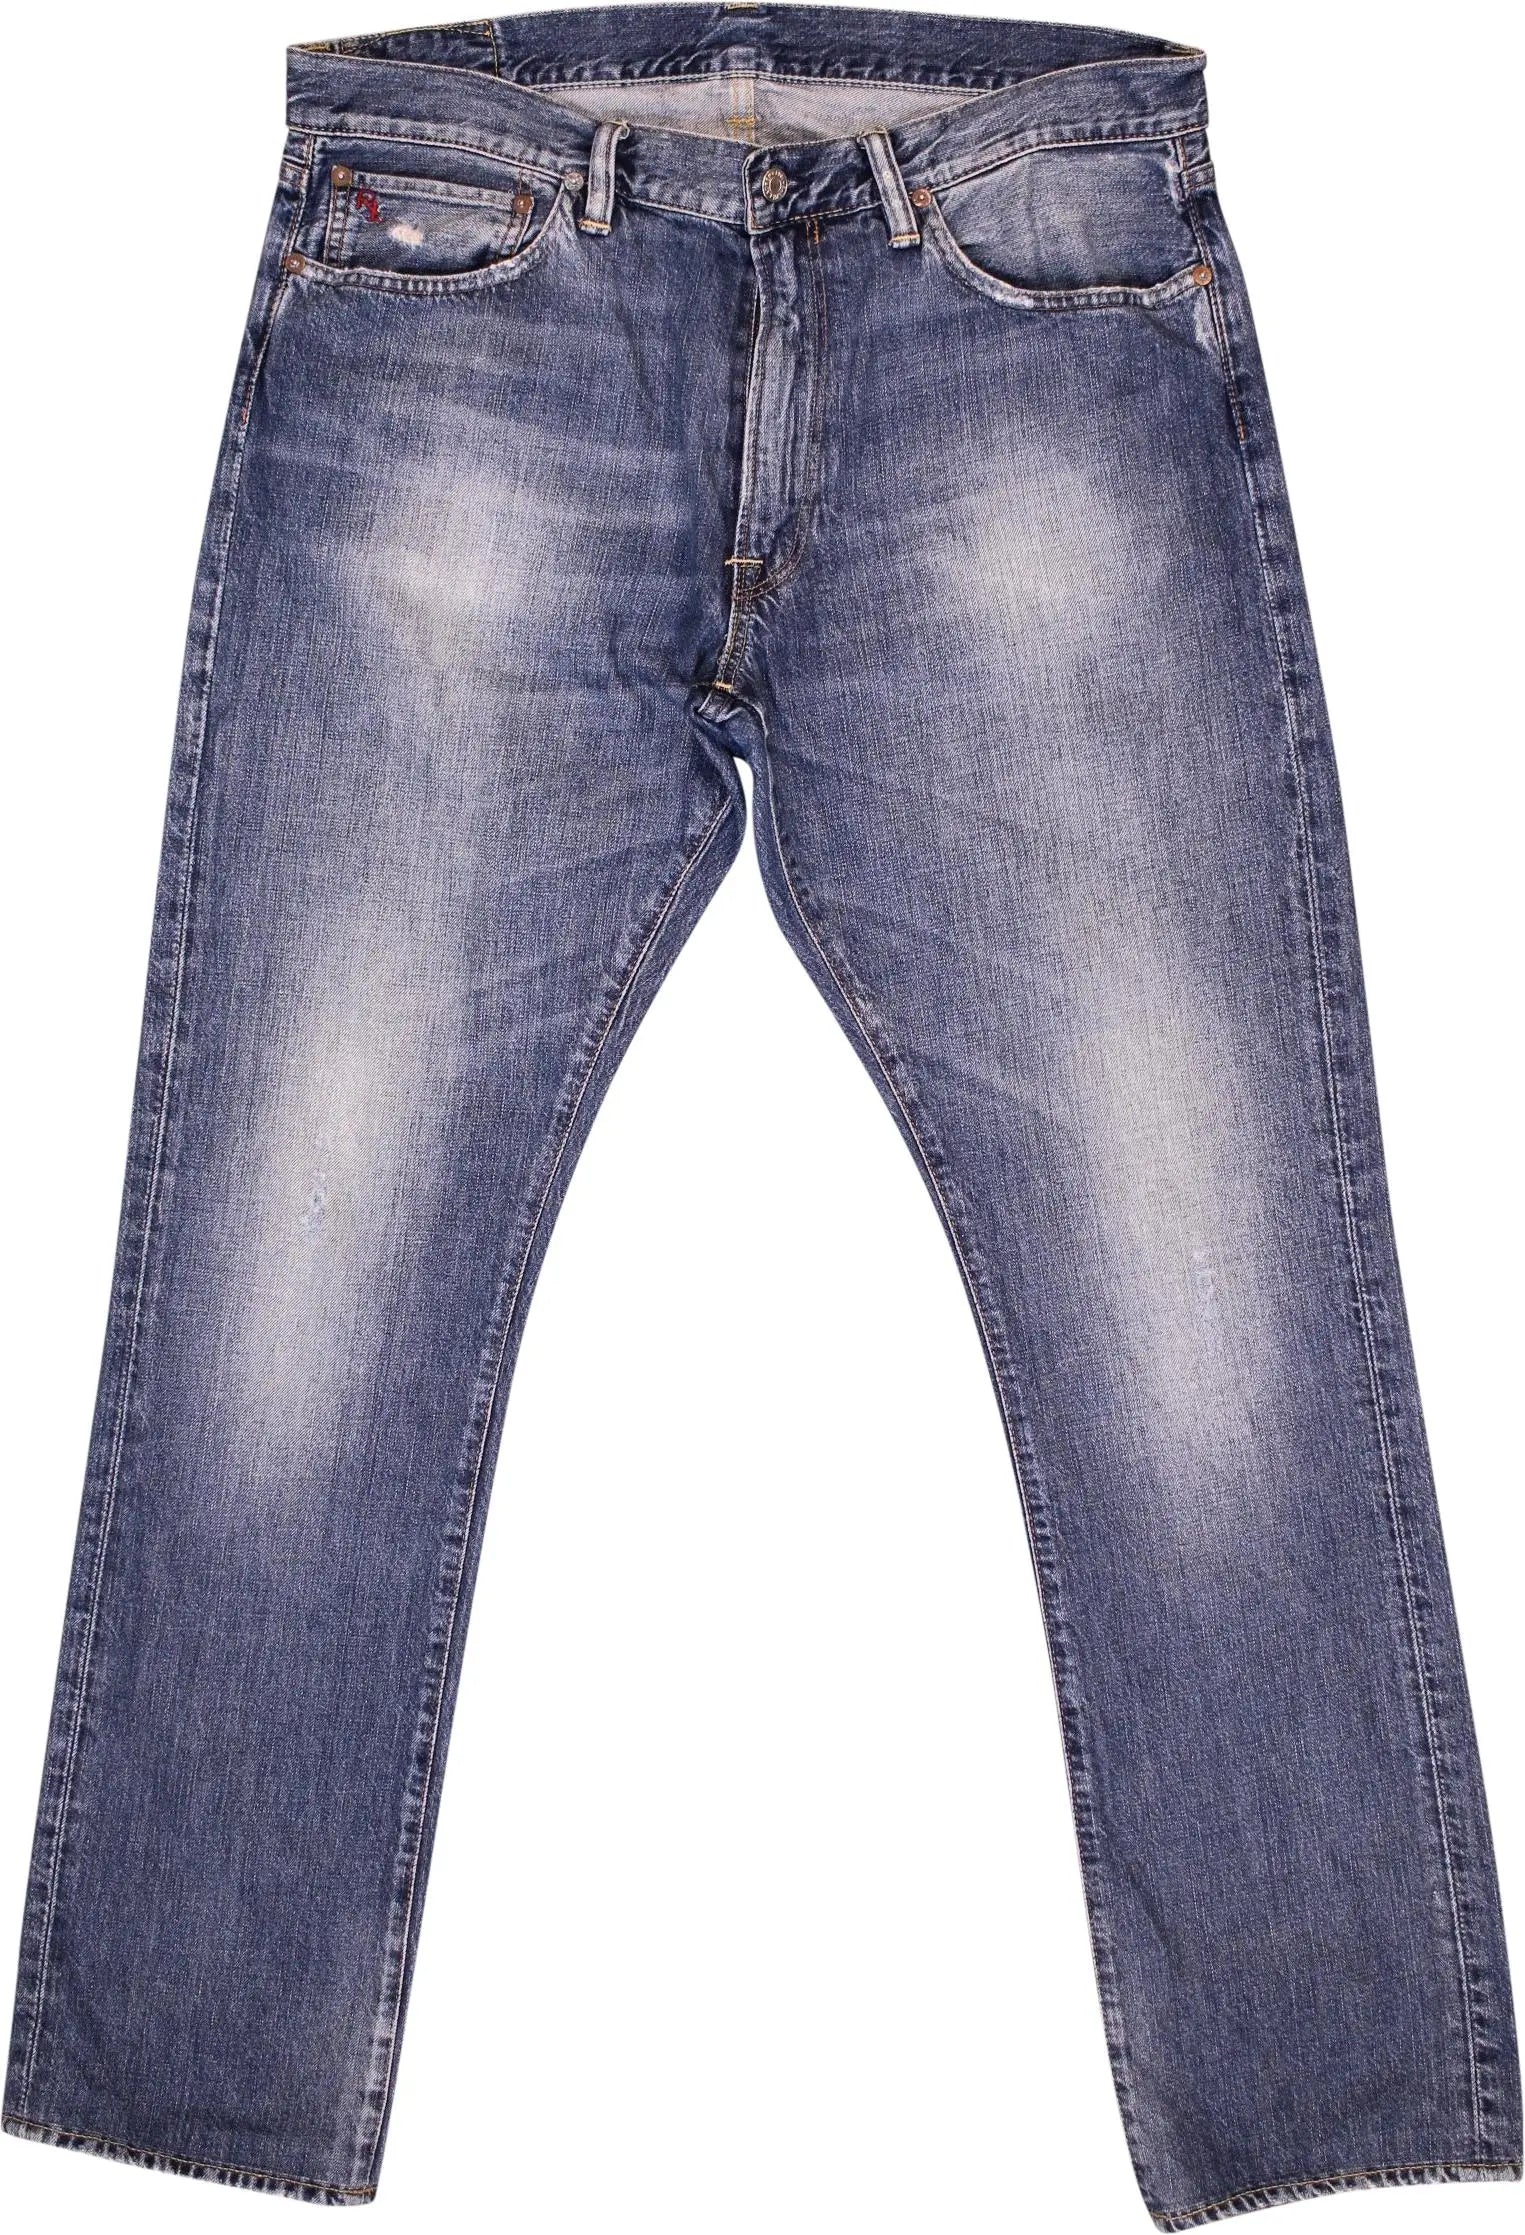 Ralph Lauren - Slim Fit Jeans by Ralph Lauren- ThriftTale.com - Vintage and second handclothing